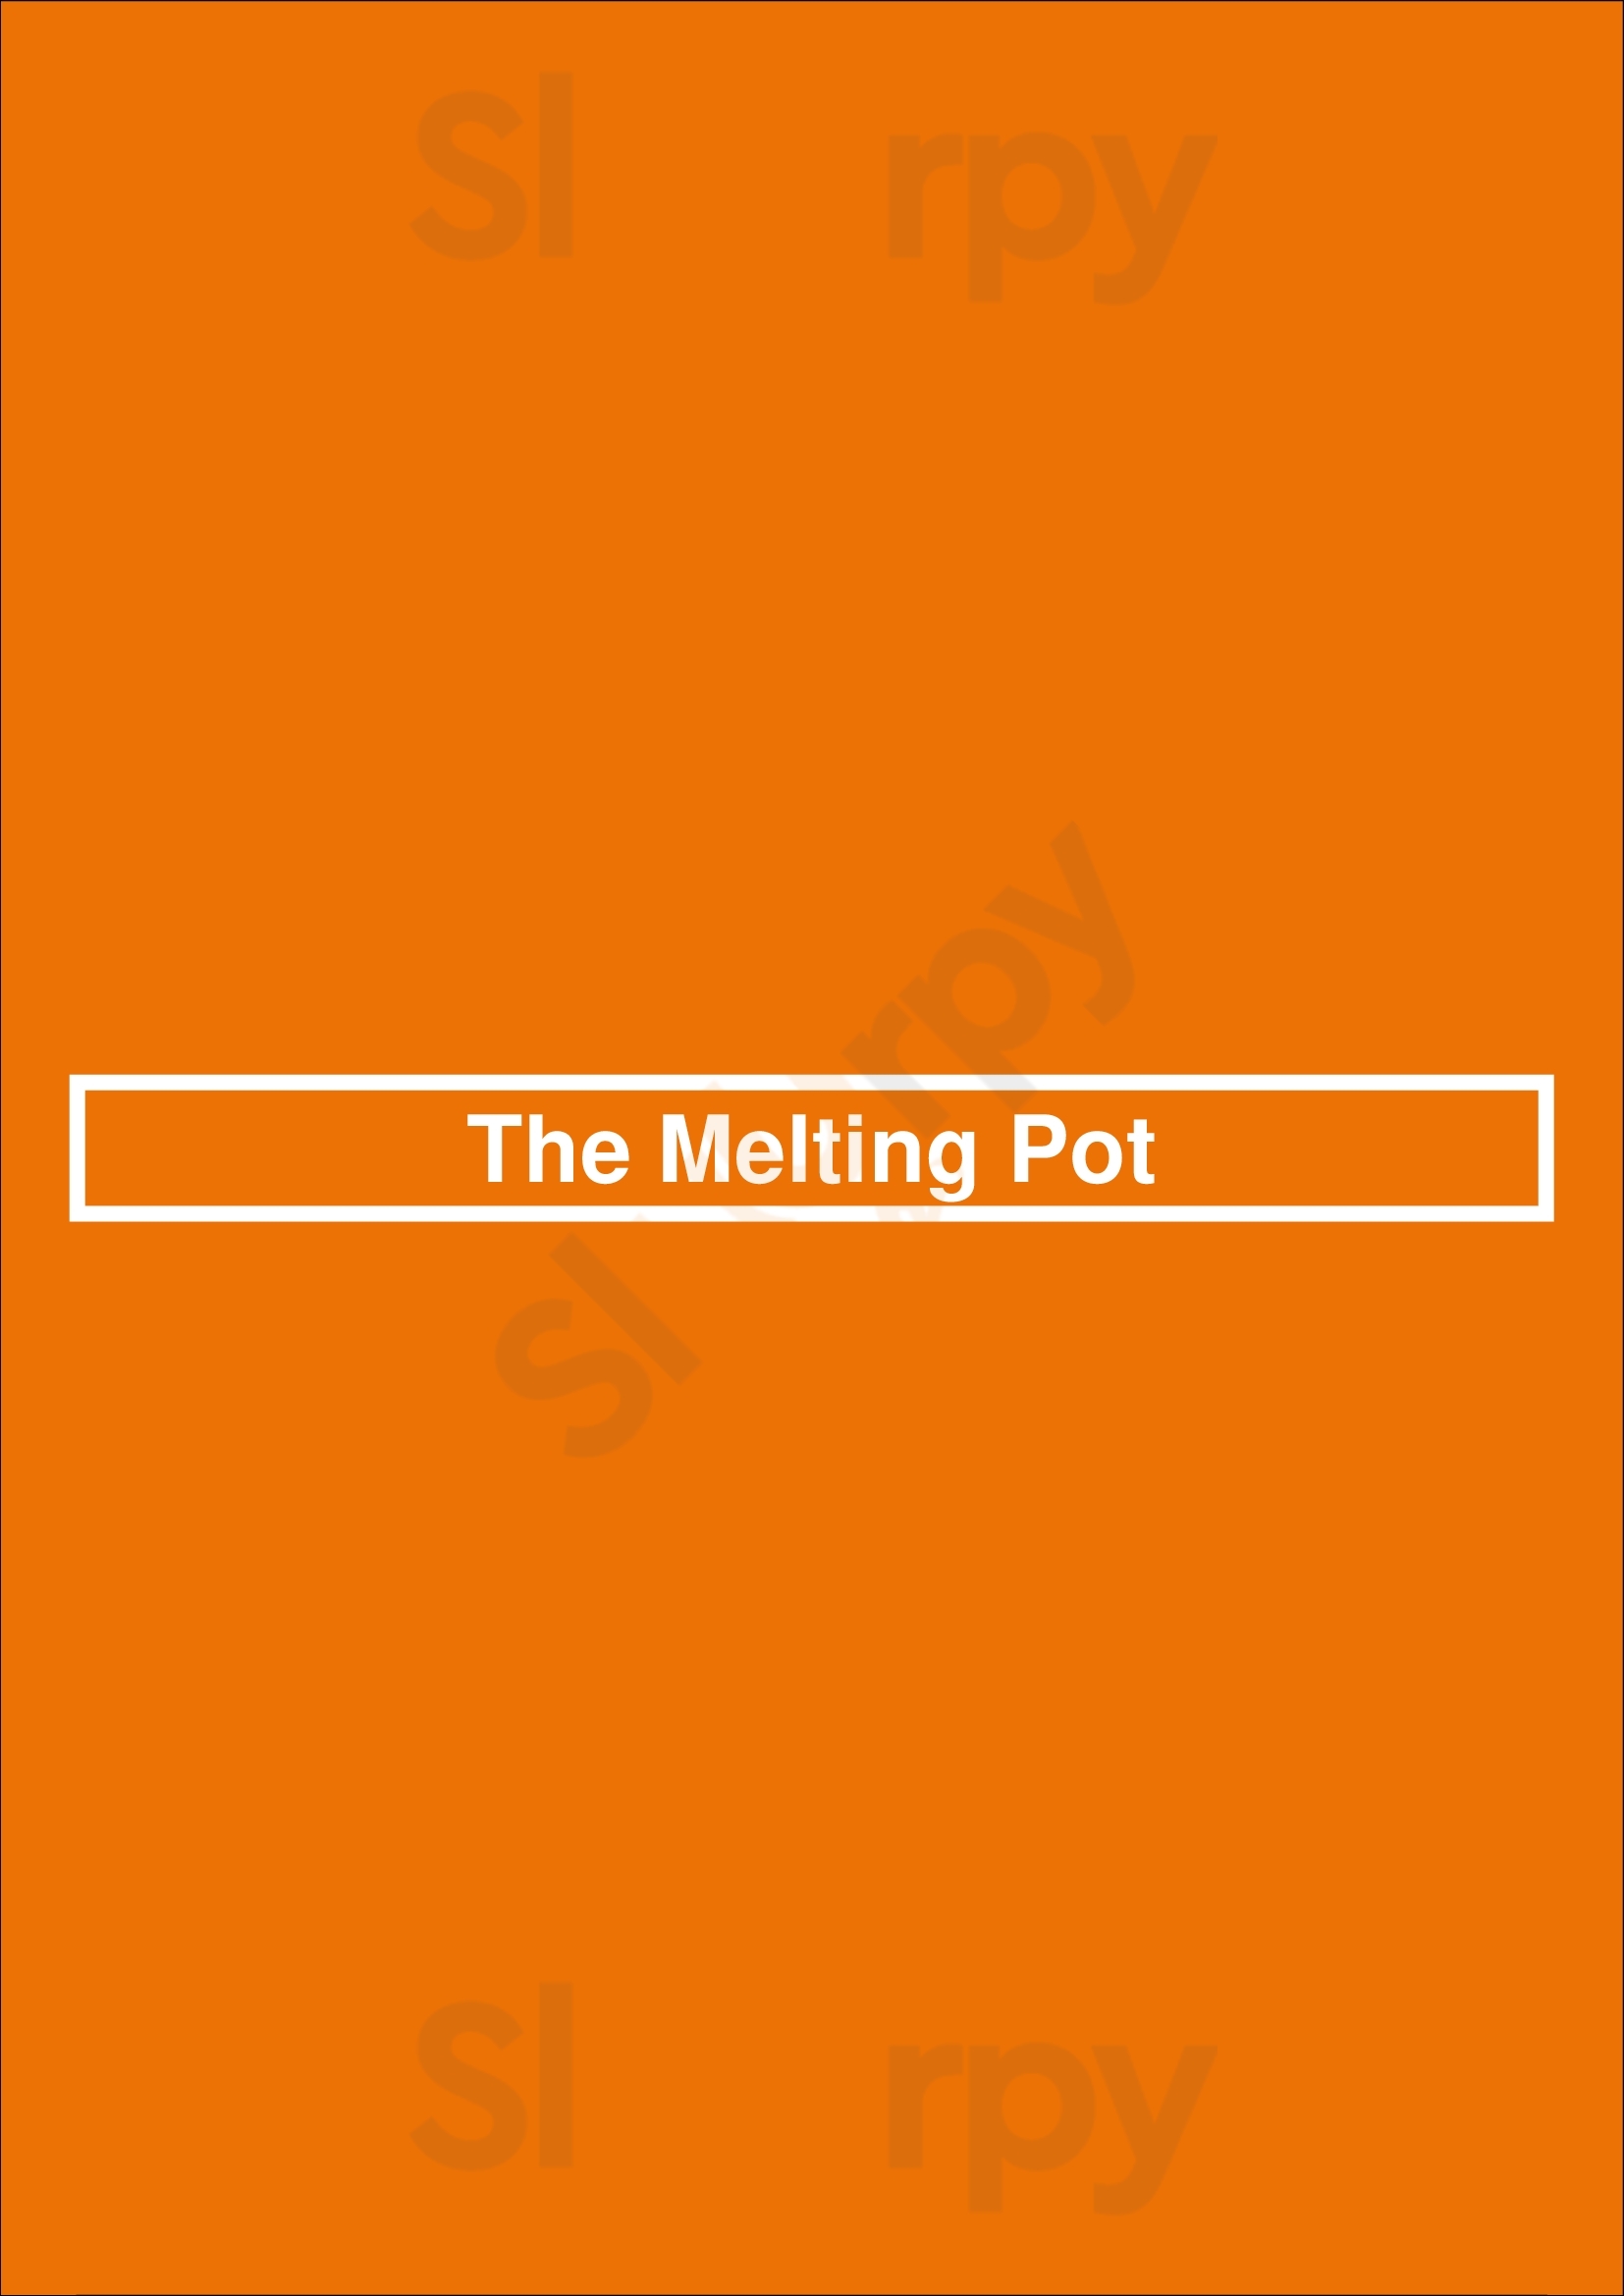 The Melting Pot Portland Menu - 1